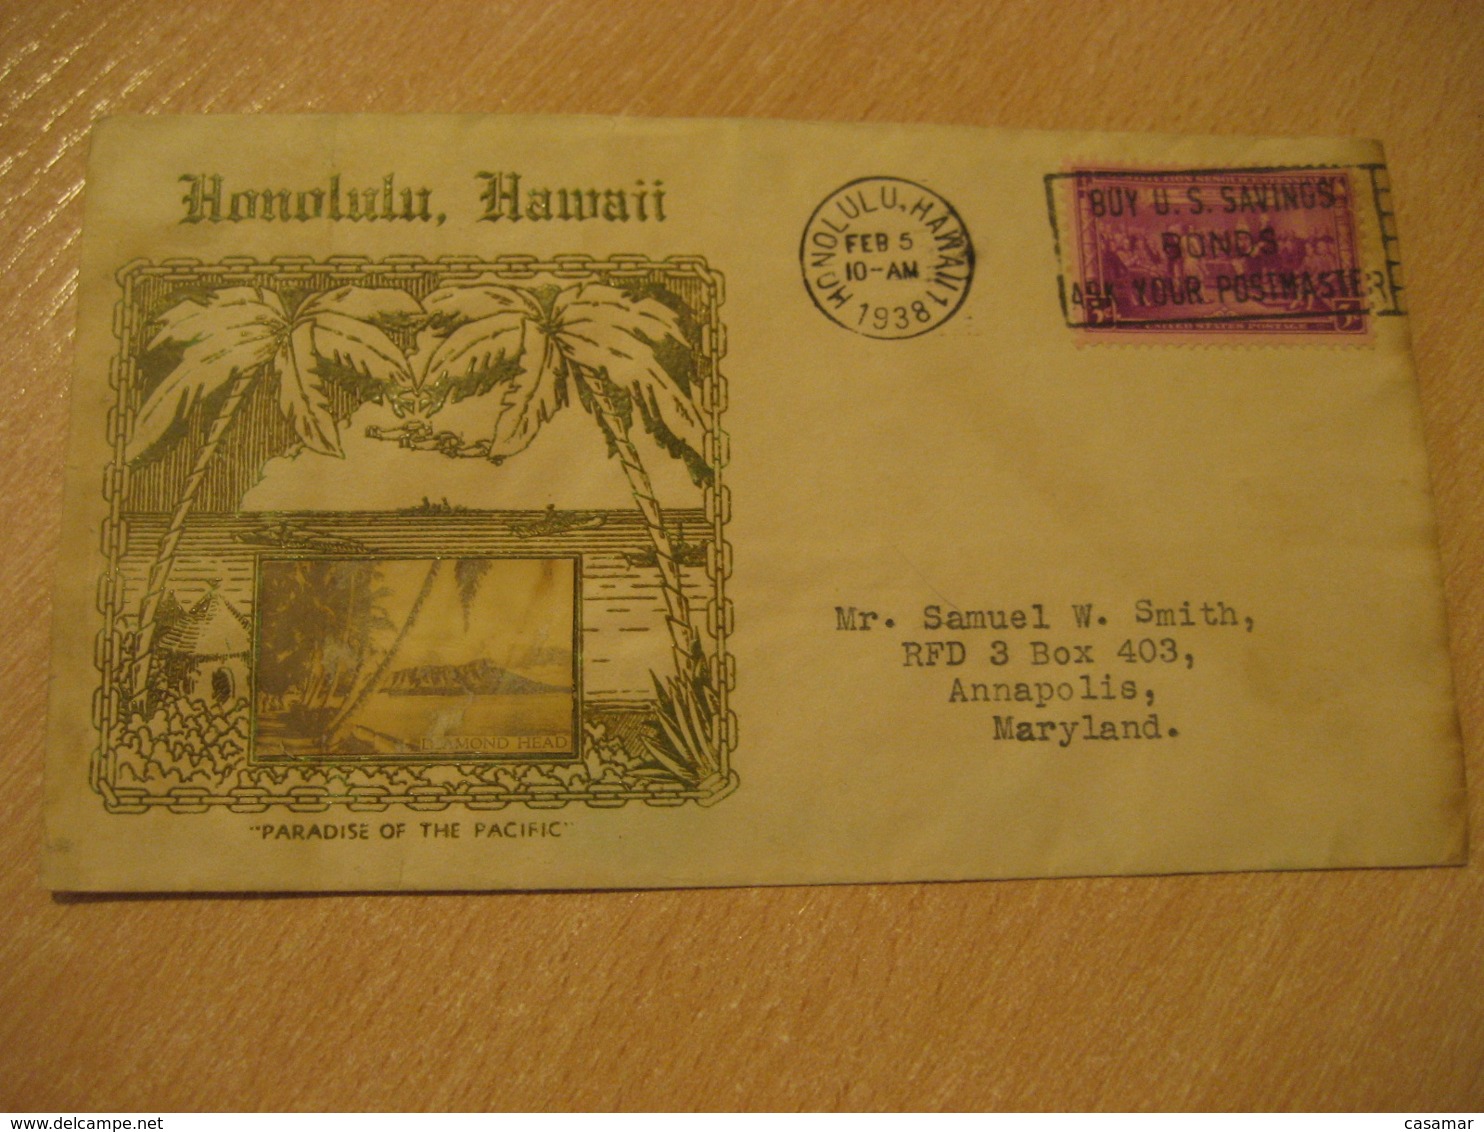 HONOLULU 1938 ACME Trans-Pacific Service Paradise Of Pacific Diamond Head Buy U.S. Savings Bonds HAWAII Cancel Cover USA - Hawaï